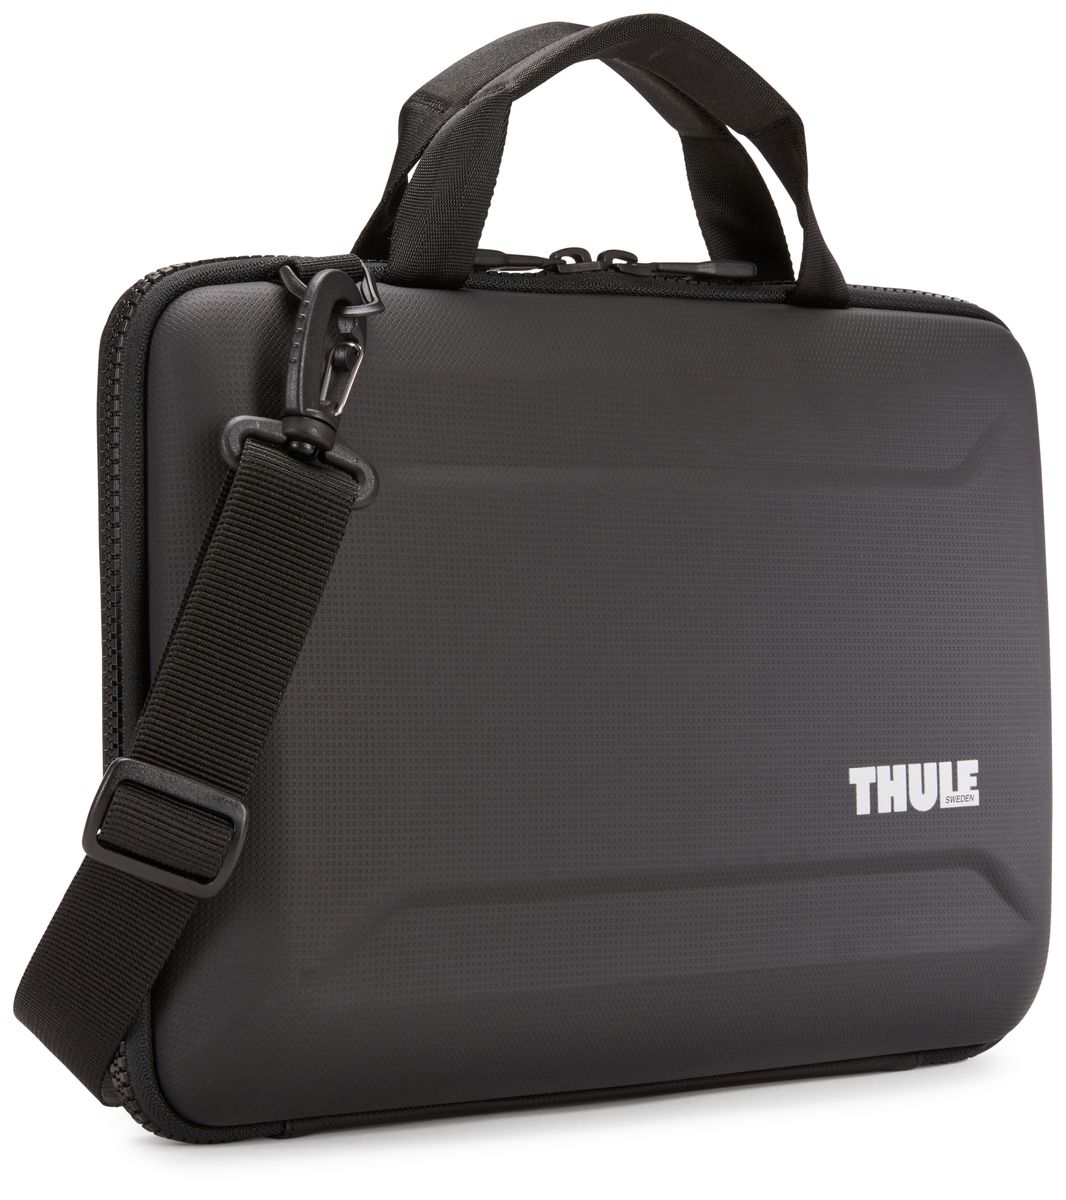 Thule Gauntlet 4.0 brašna na 14" MacBook Pro TGAE2358 - černá TL-TGAE2358K